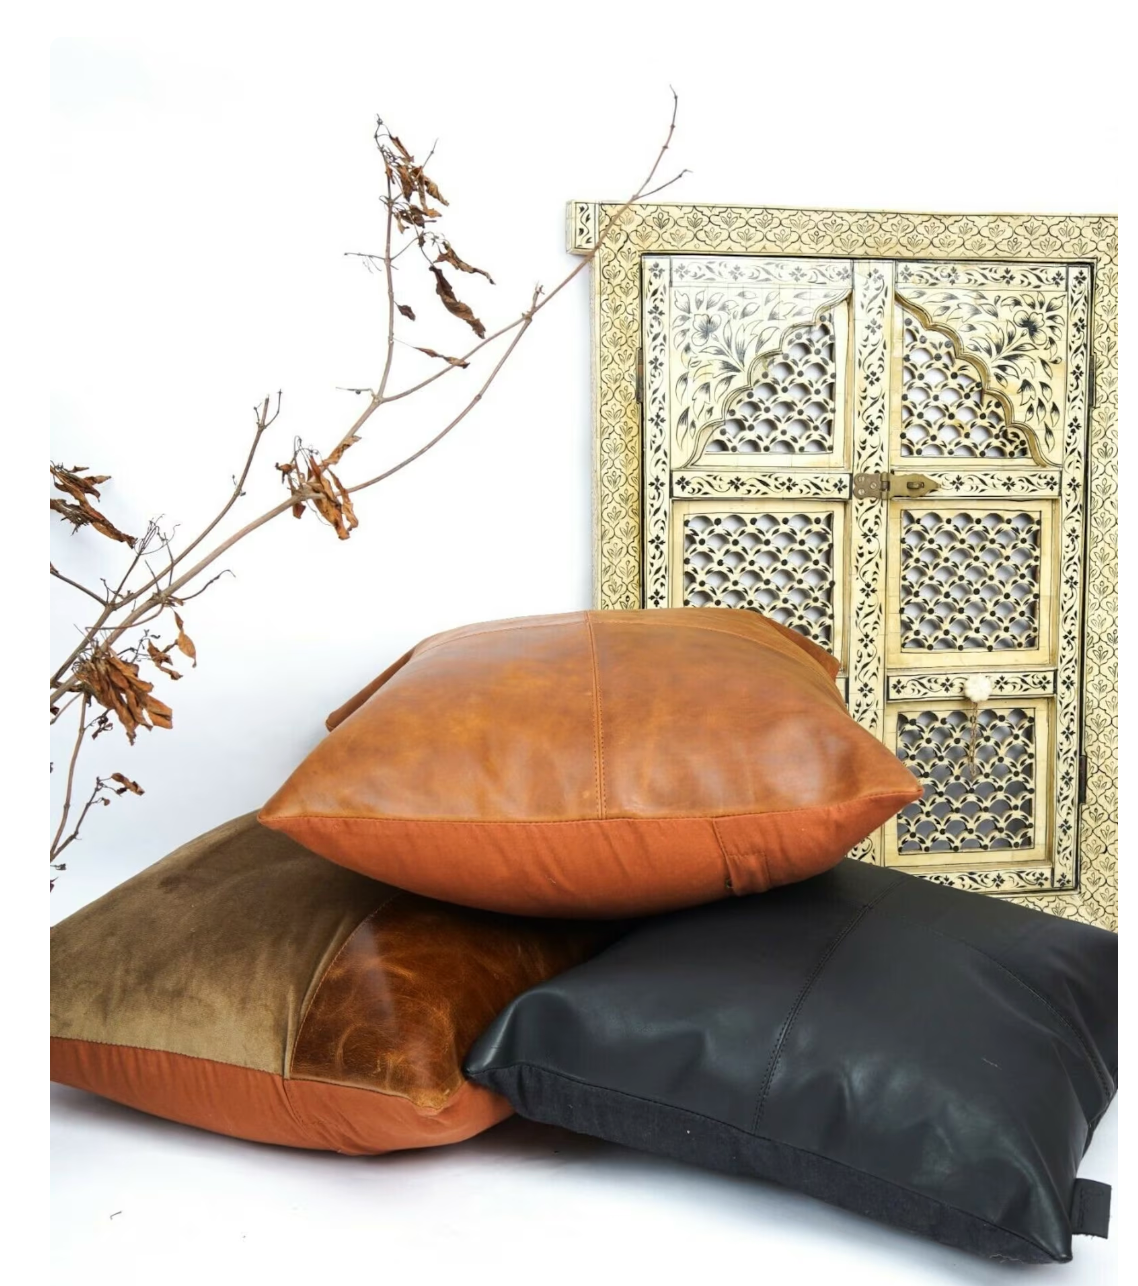 Cowhide Tan Leather Cushion Cover